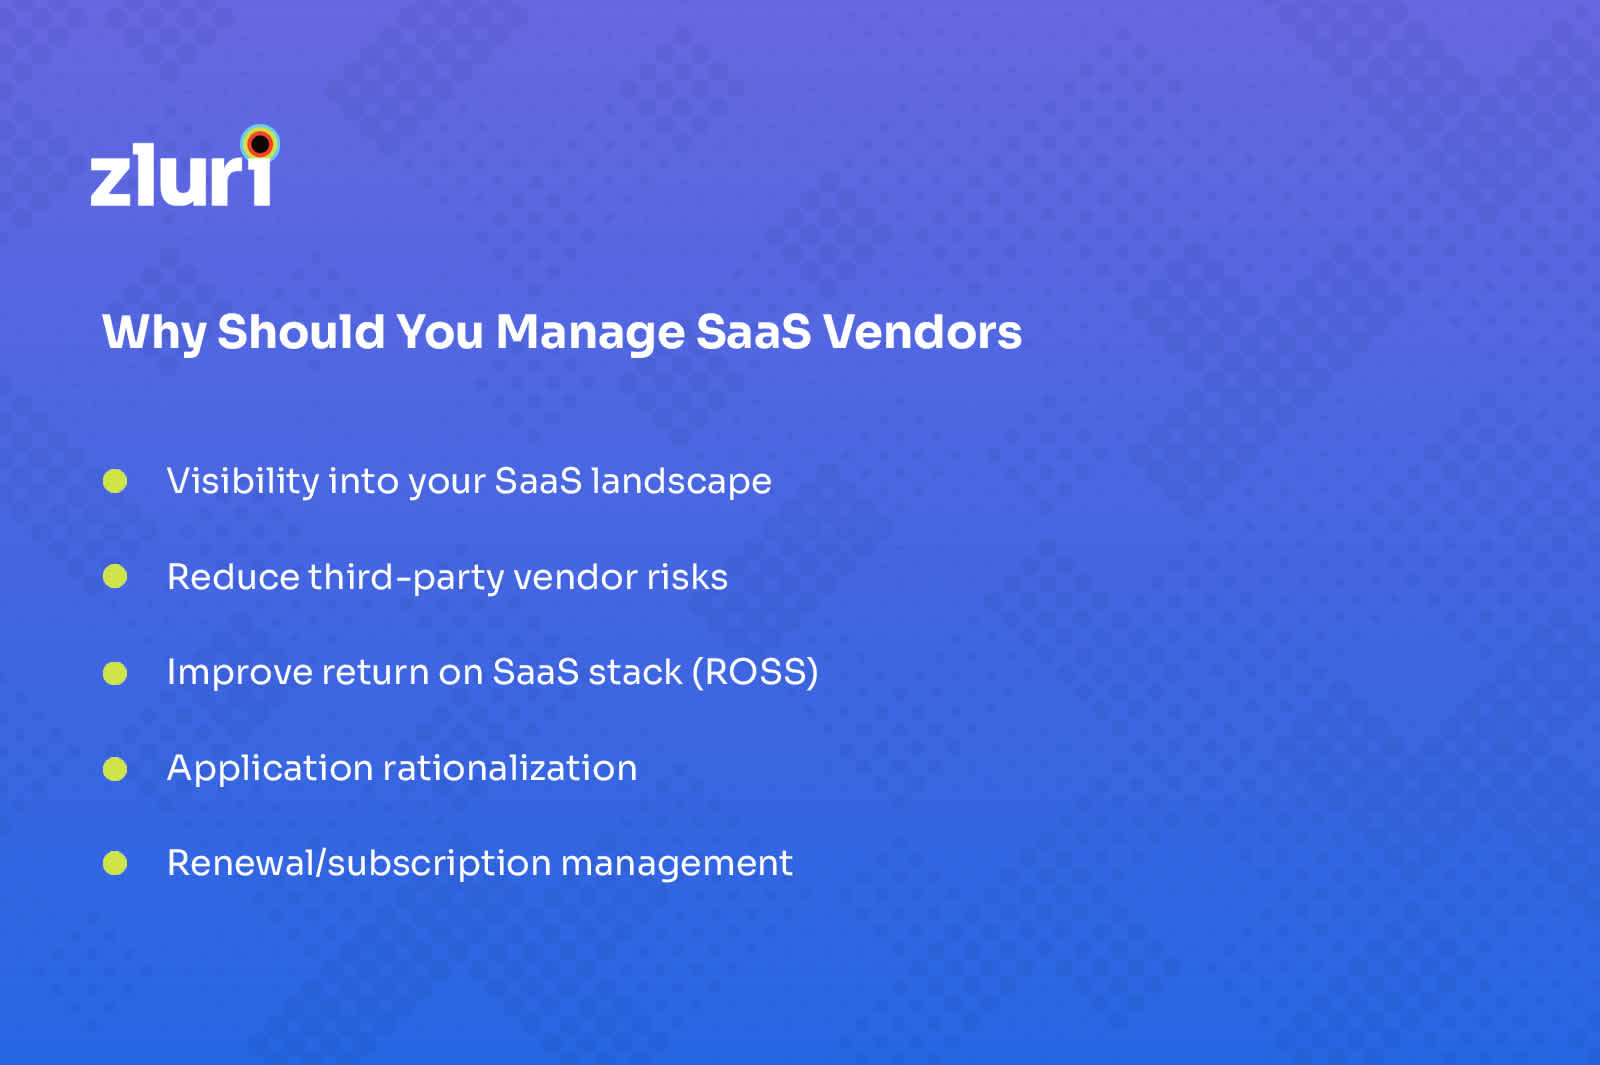 manage SaaS vendors